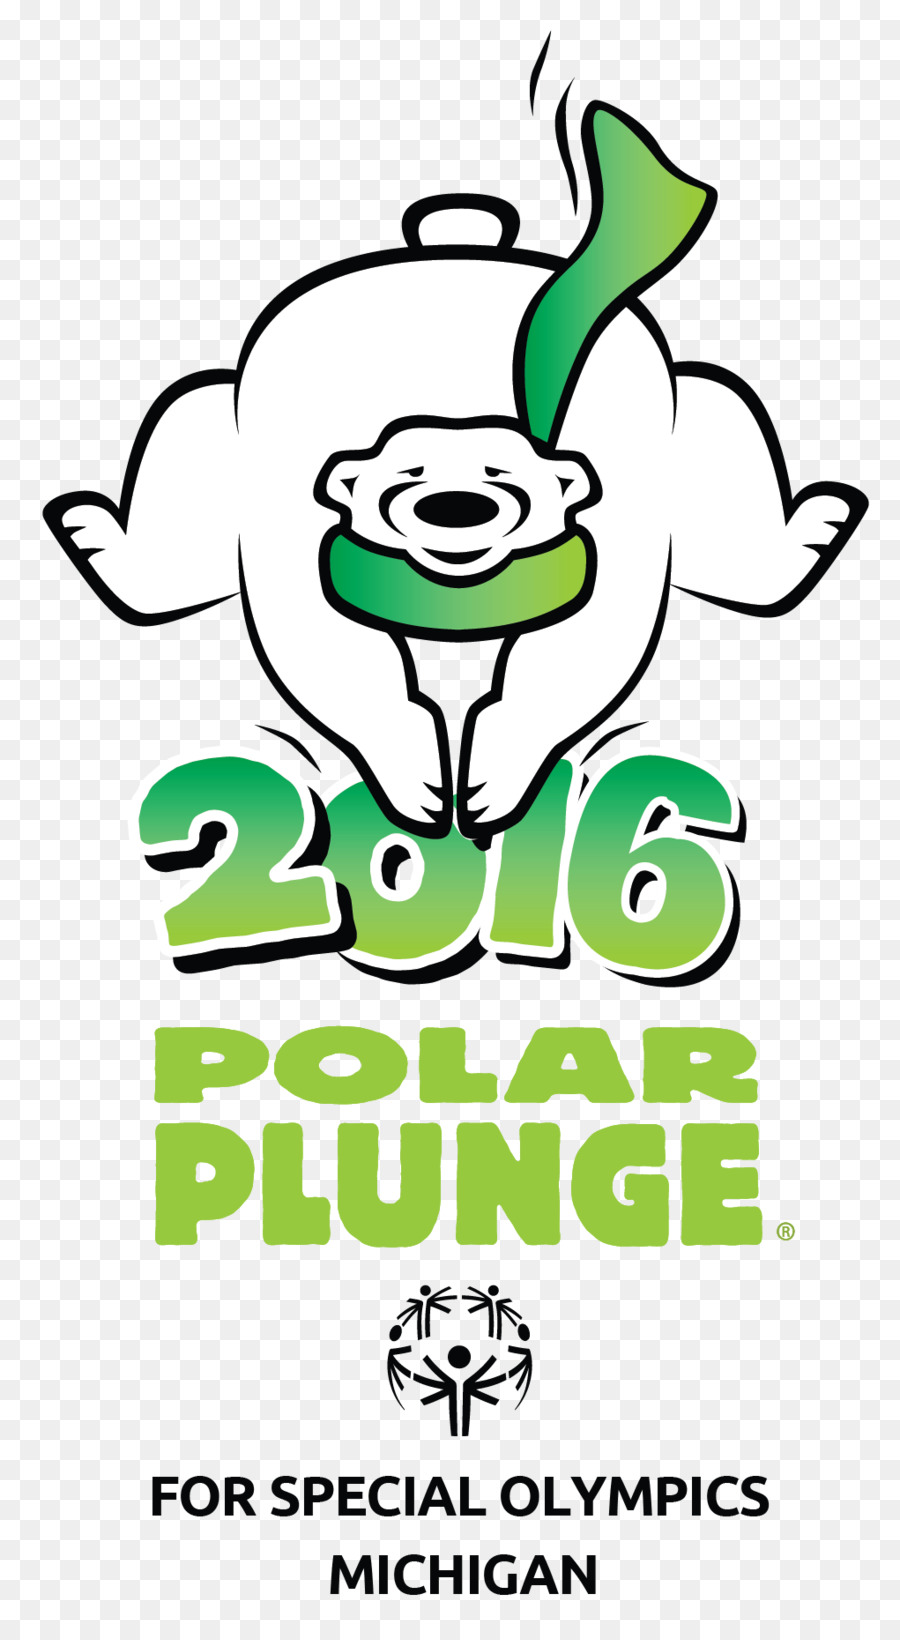 Polar bear plunge Special Olympics Oklahoma Law Enforcement Torch Run Capital Bereich Polar Plunge - Special Olympische Spiele Hamilton County